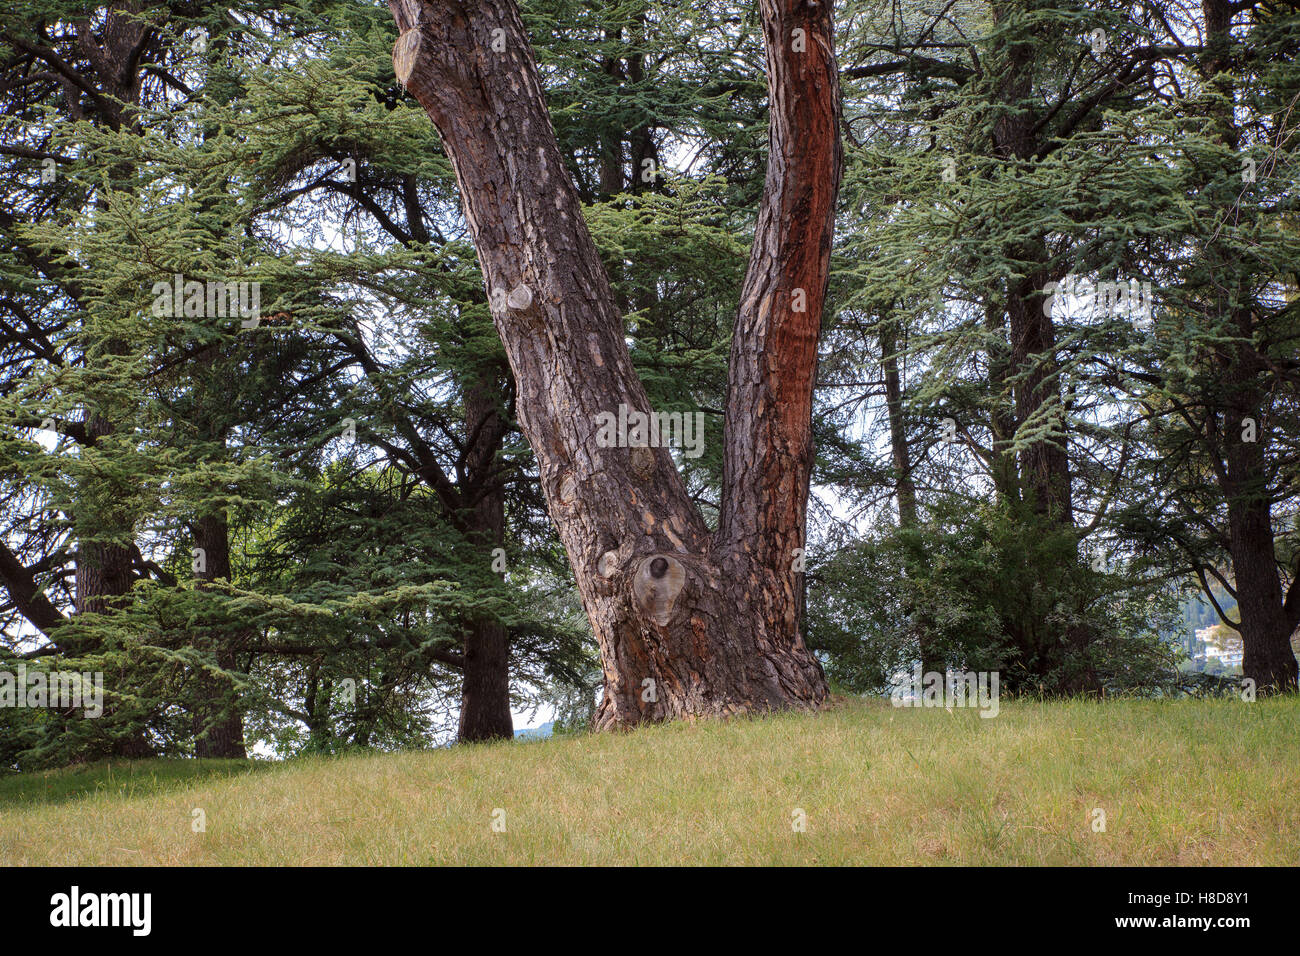 Pinus sabiniana the common names ghost pine Stock Photo